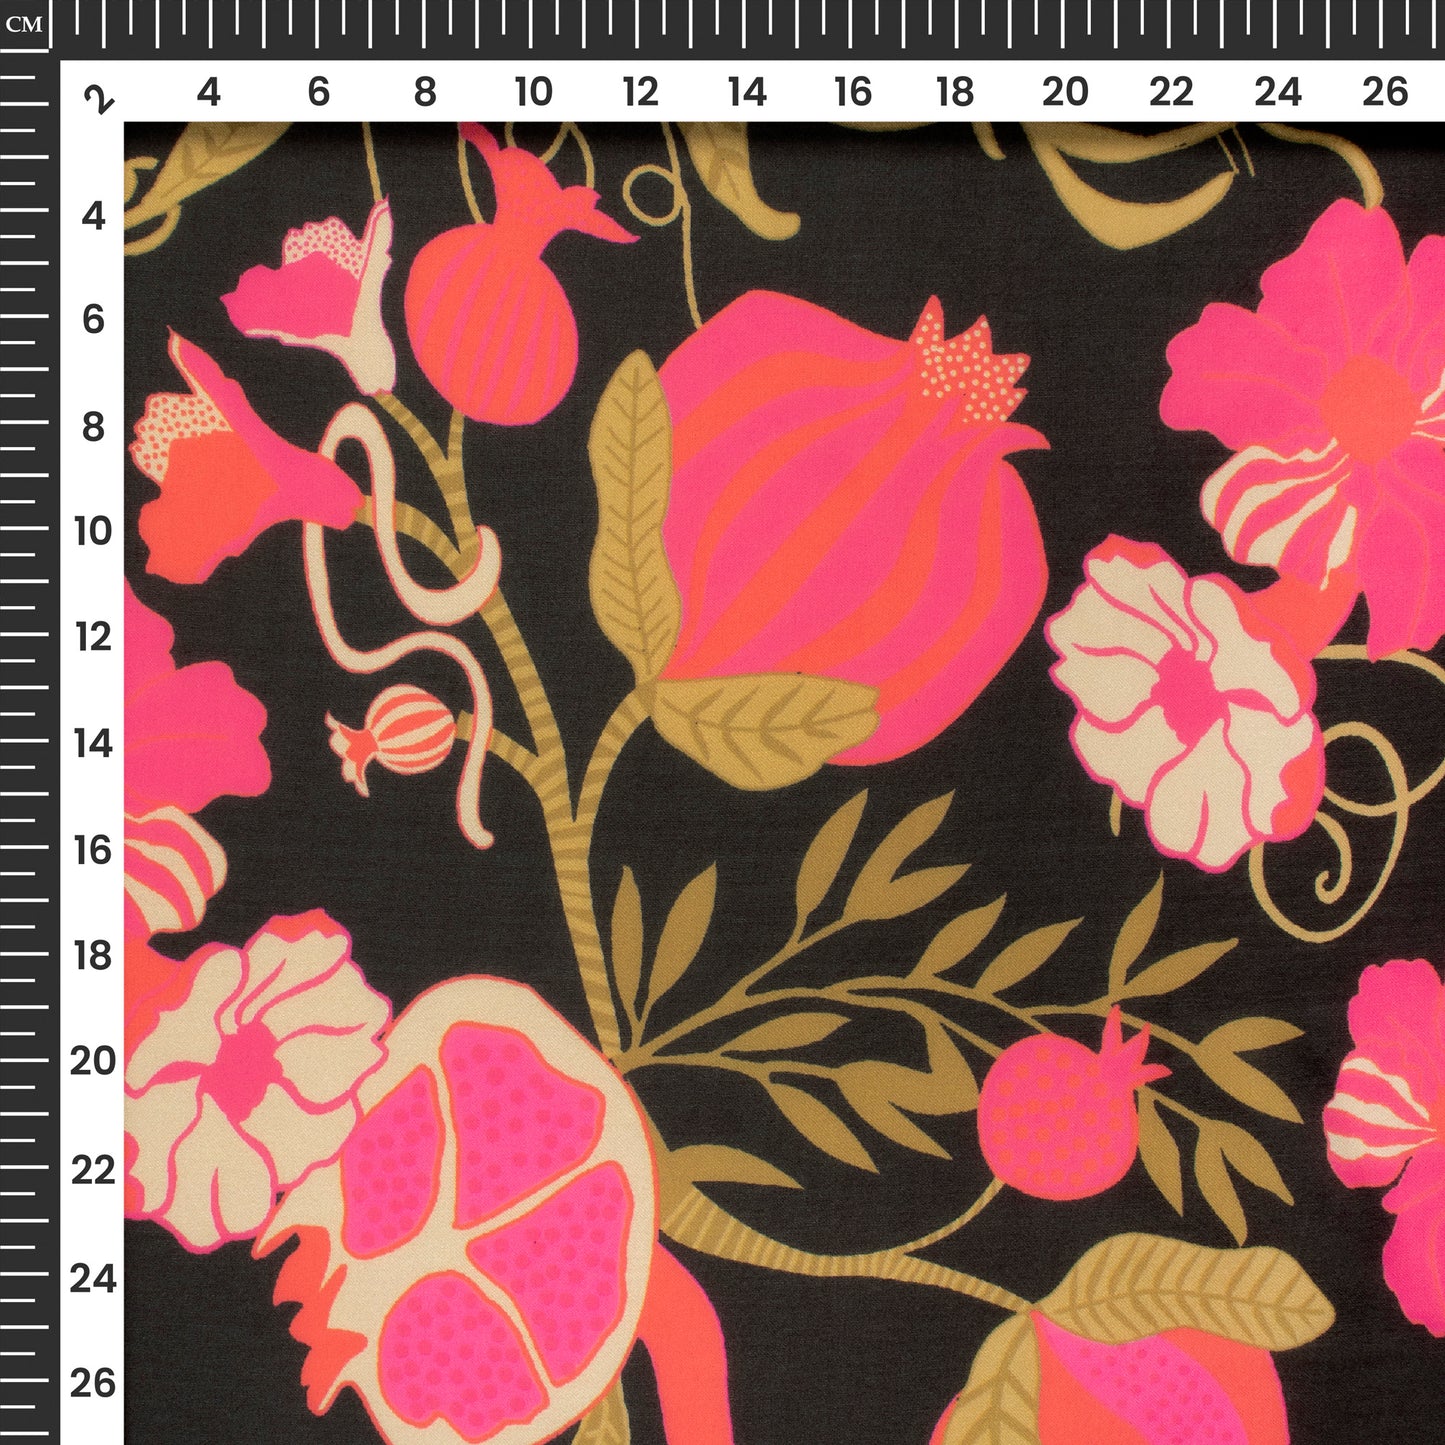 Bright Pink Floral Digital Print Georgette Satin Fabric